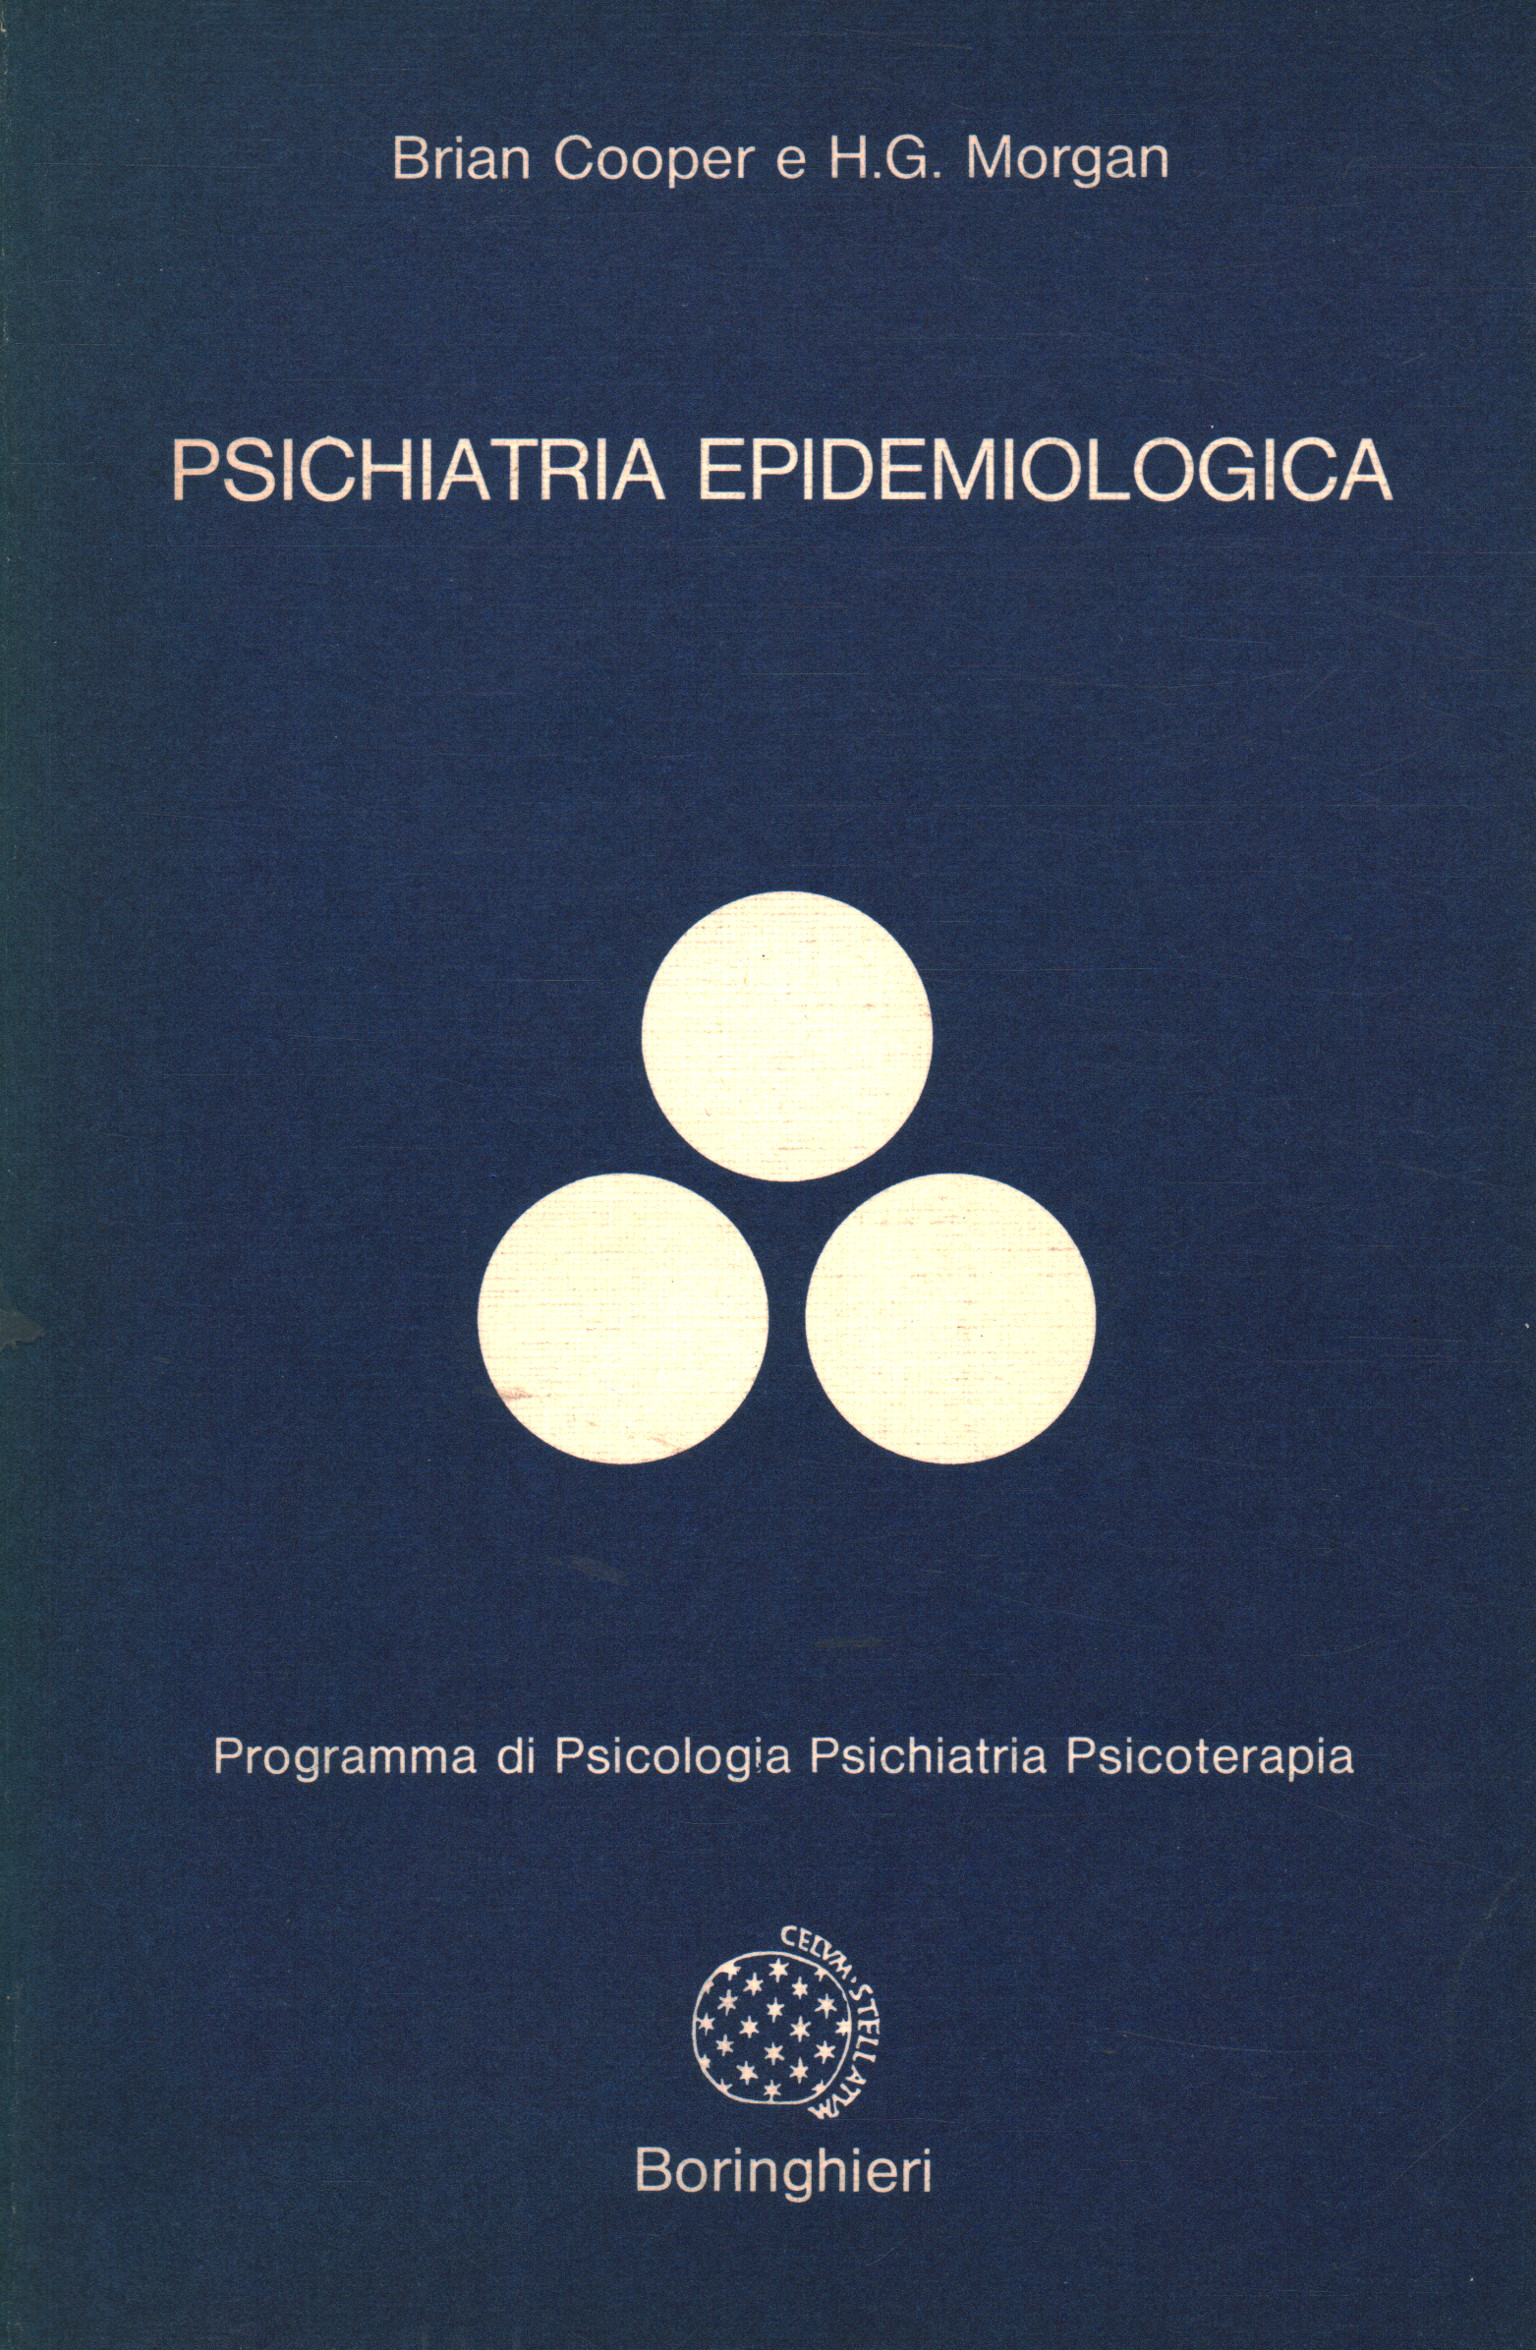 Psychiatry epidemiological, Brian Cooper H. G. Morgan